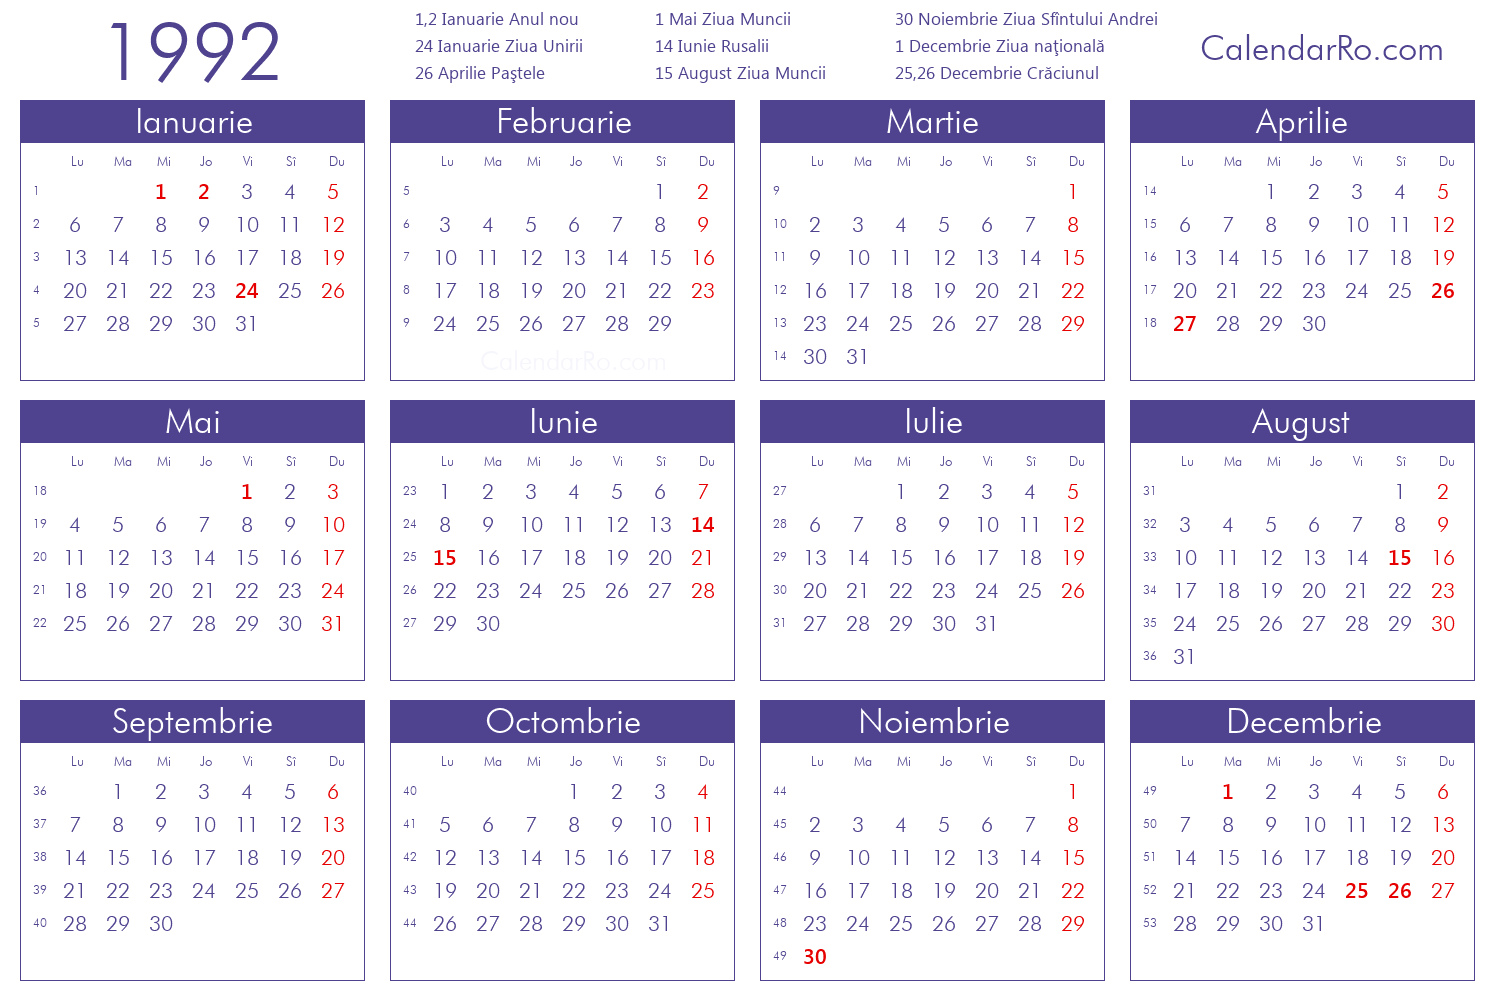 Calendar 1992